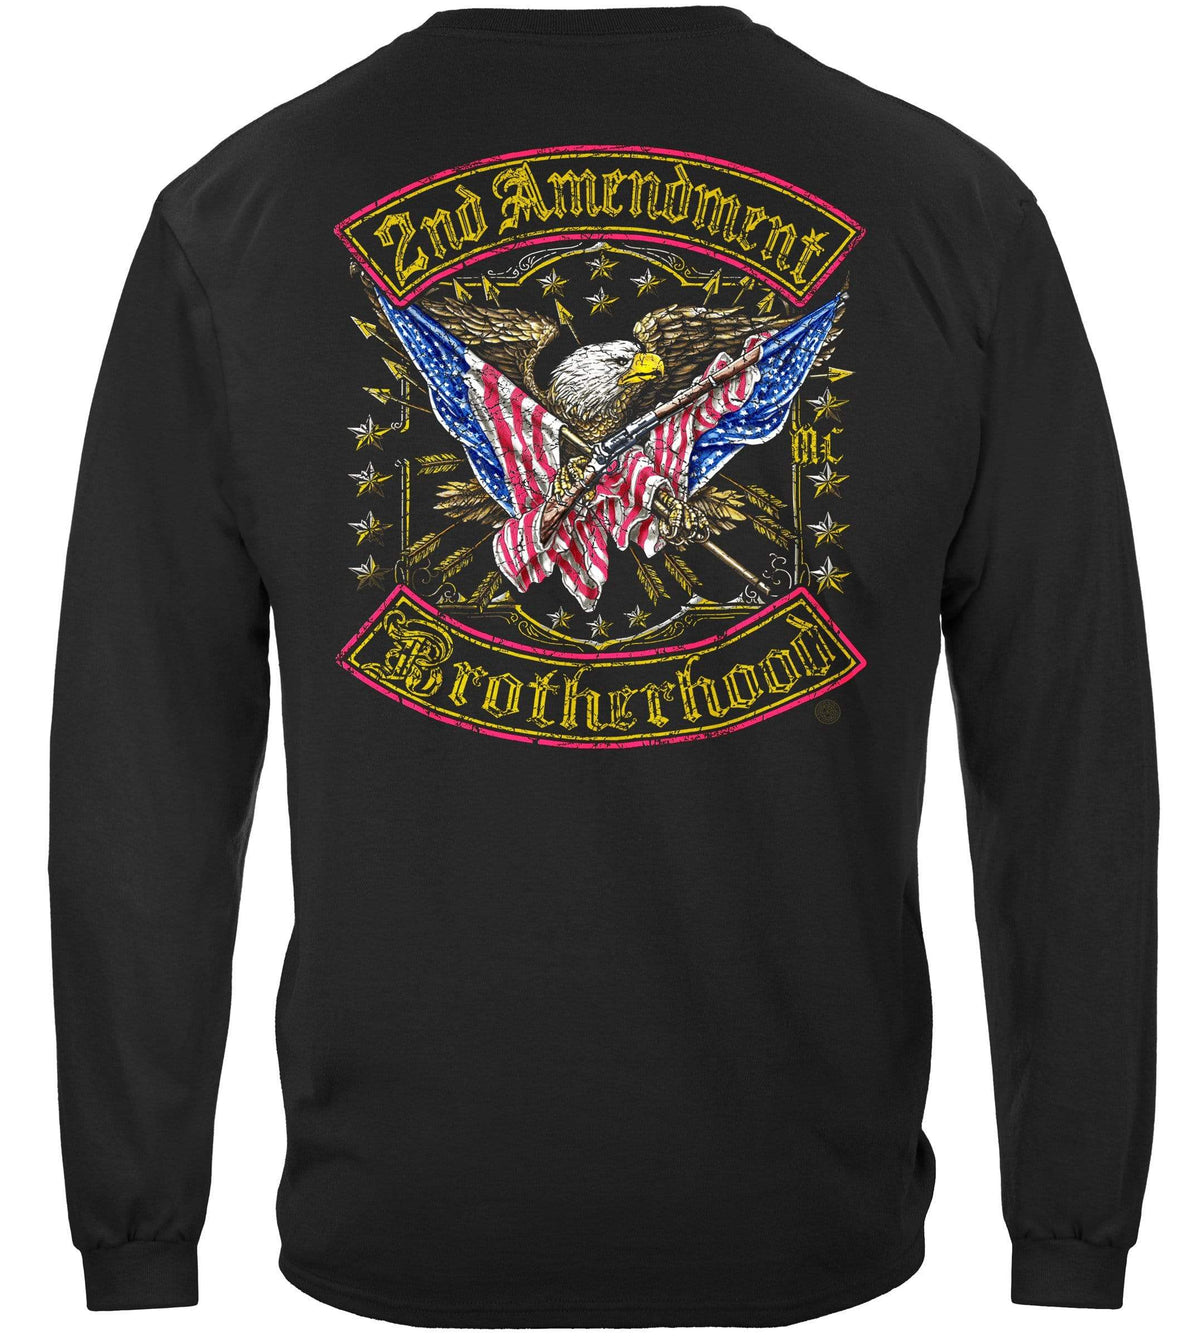 2nd Amendment Brotherhood T-Shirt